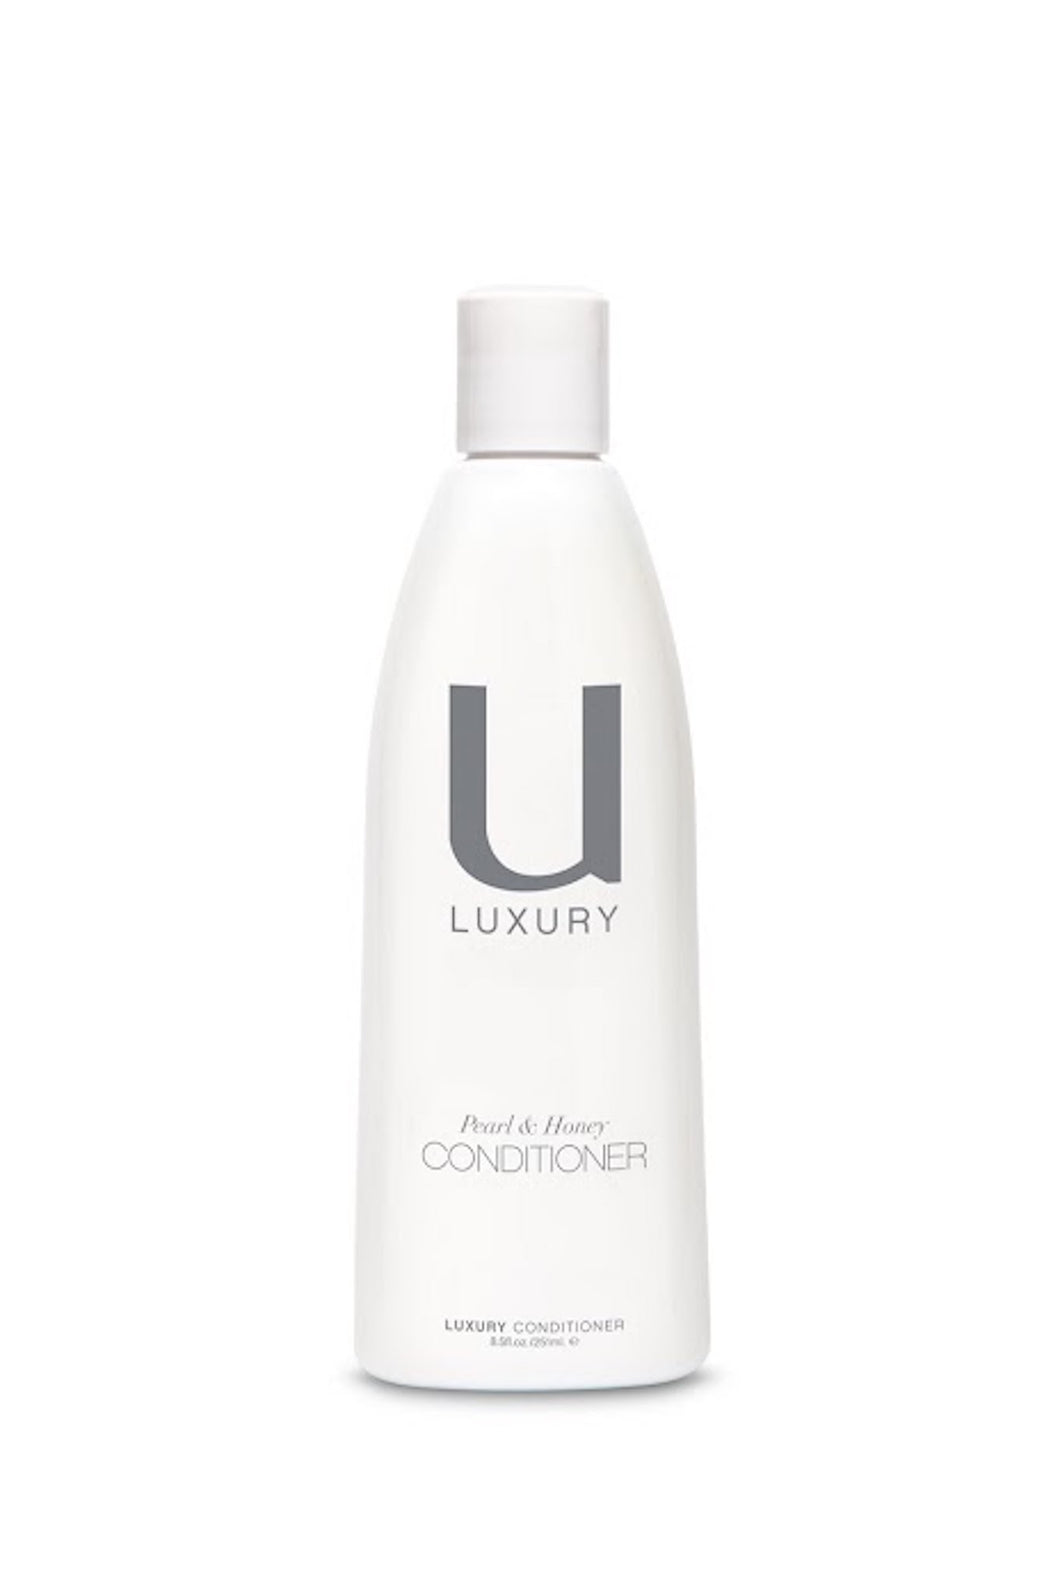 Unite - U LUXURY Conditioner white 8.5 oz. bottle with white cap.